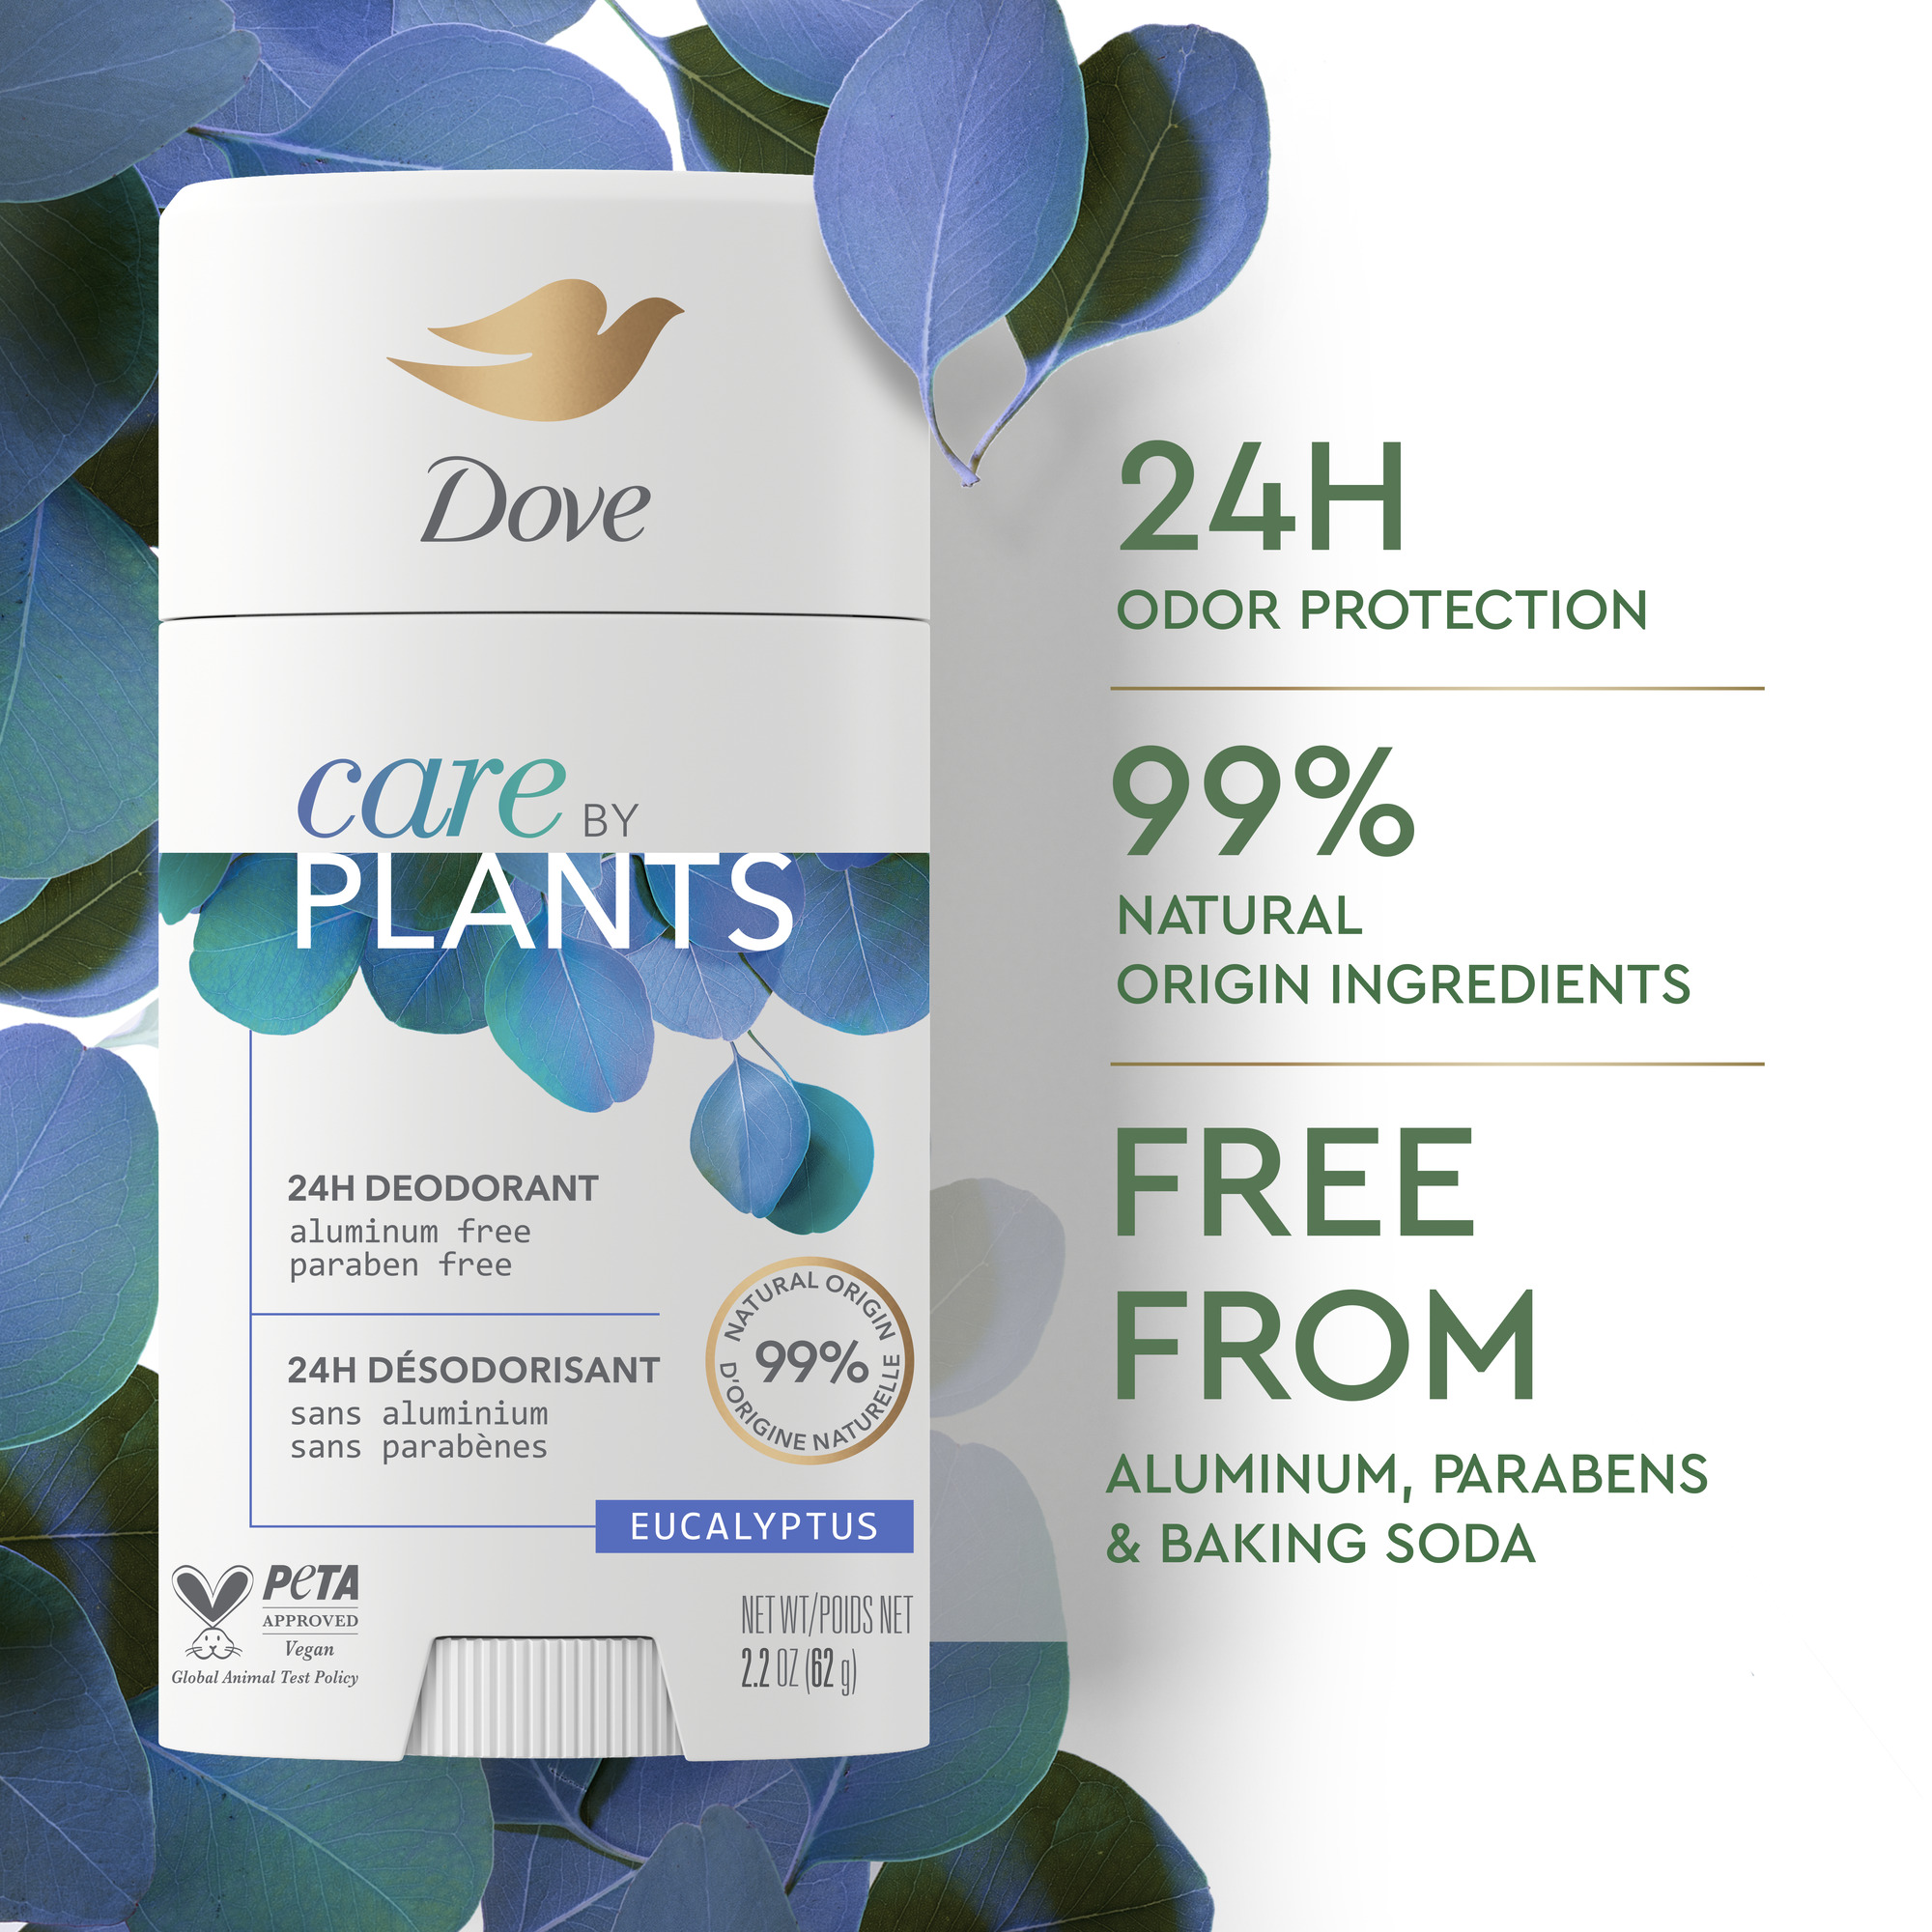 Dove Care by Plants Eucalyptus Deodorant 2.6 Oz - image 5 of 10